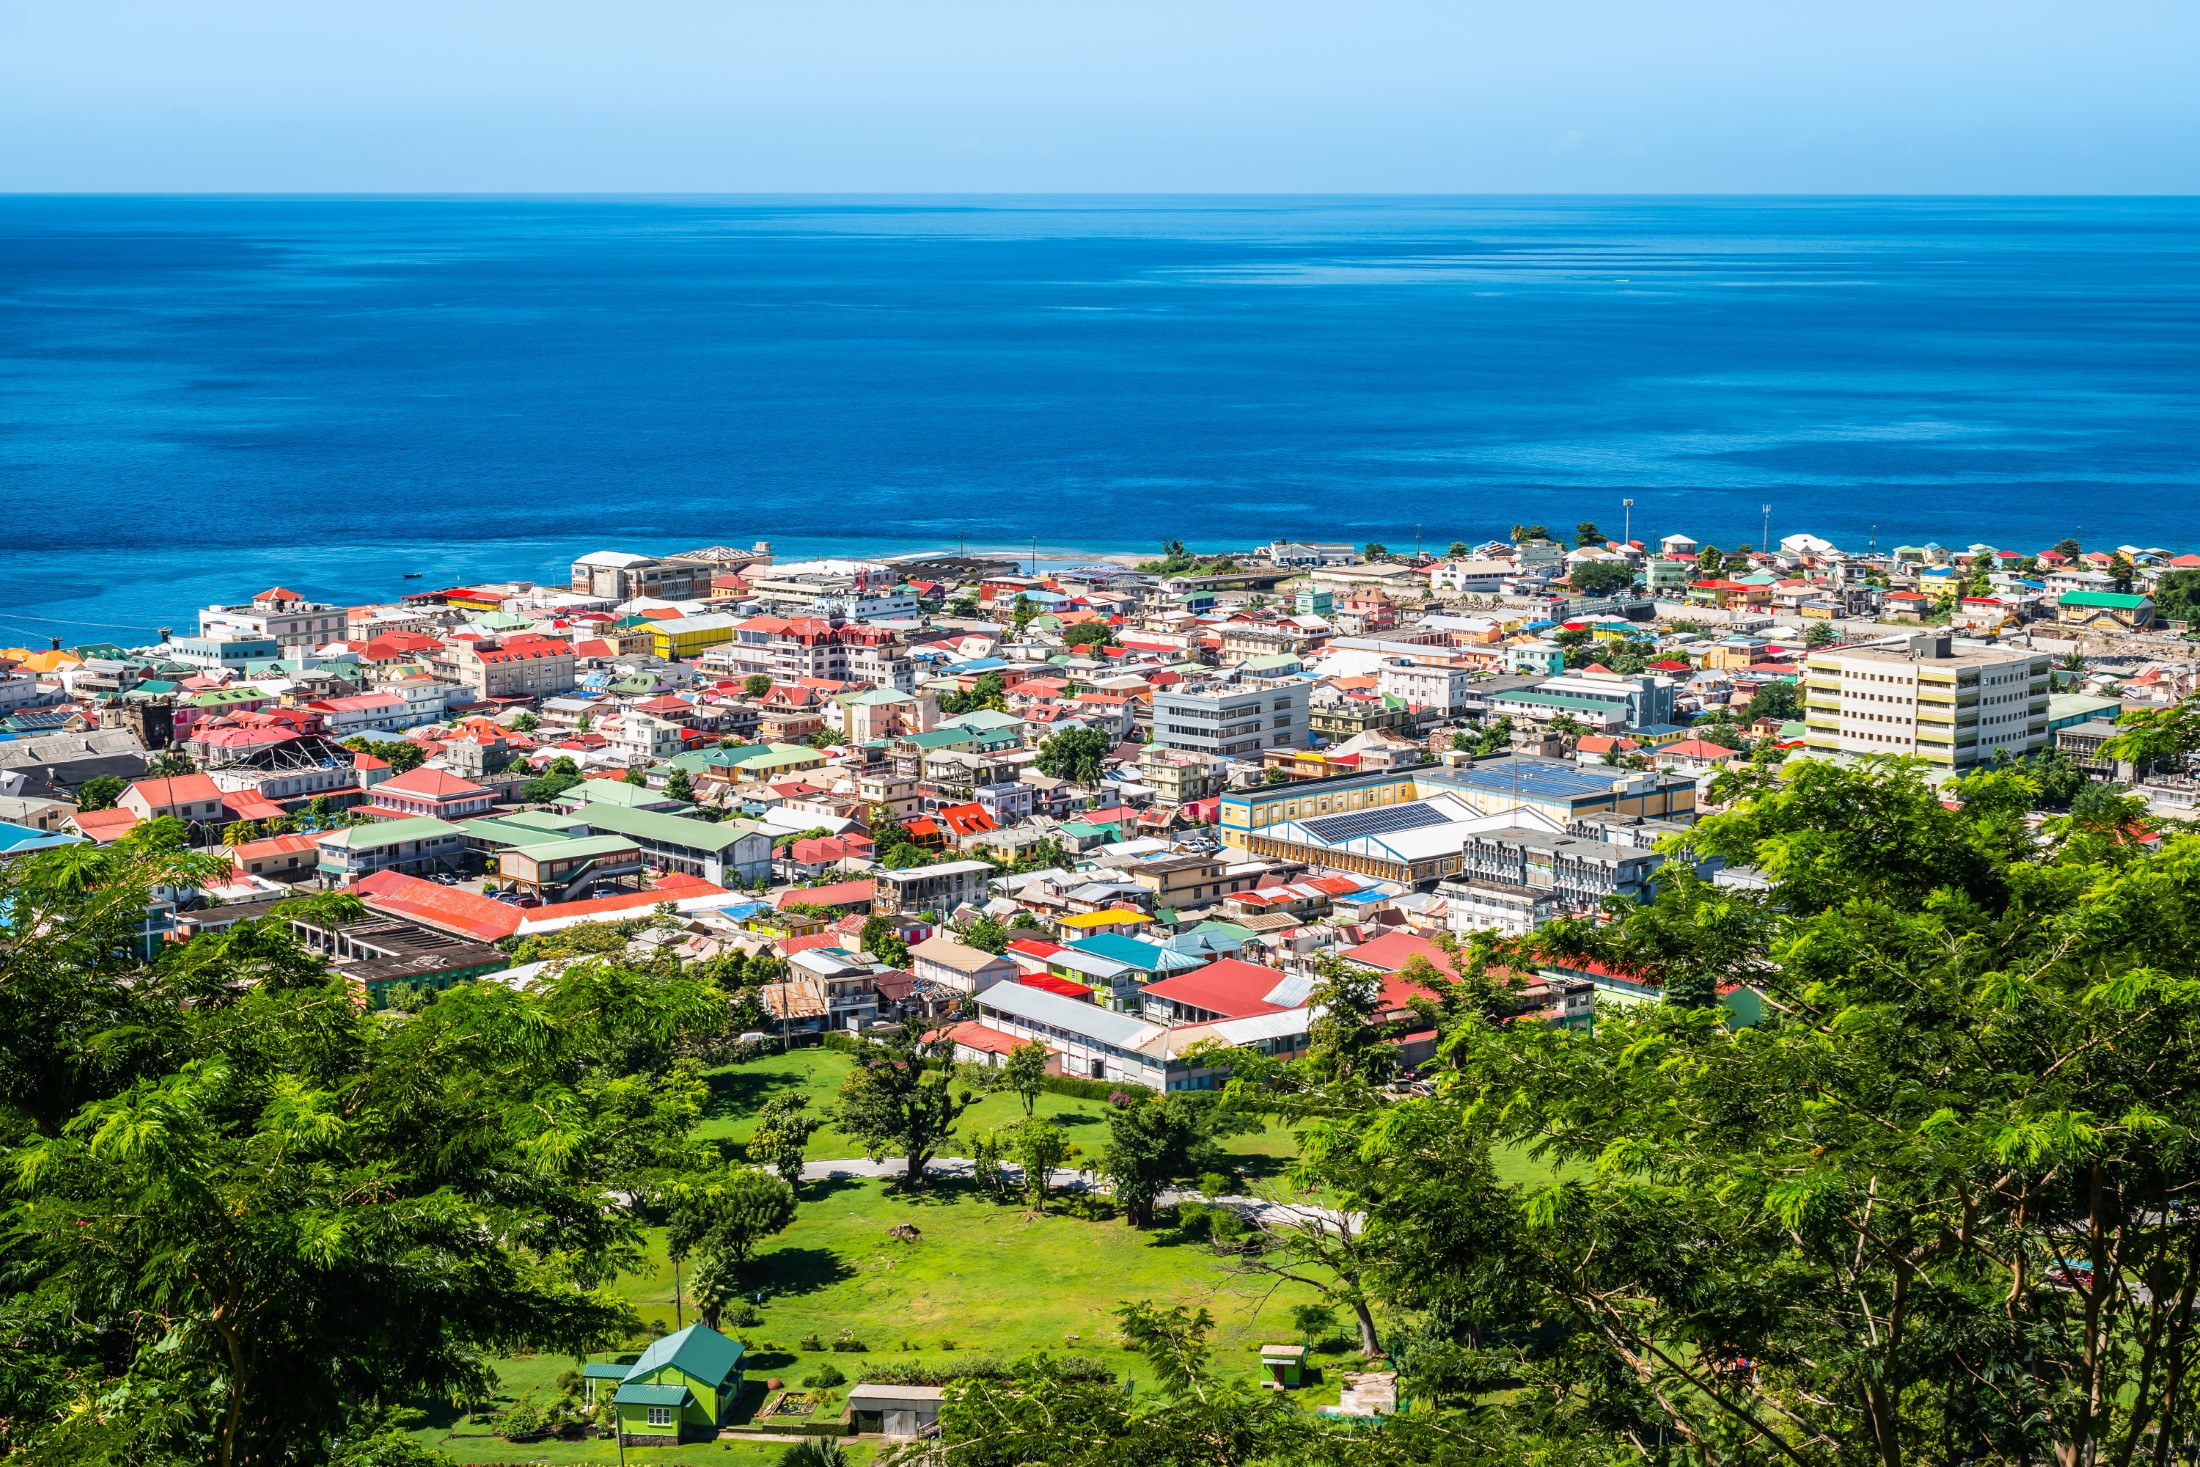 Widok z lotu ptaka na miasto Roseau na Dominice.